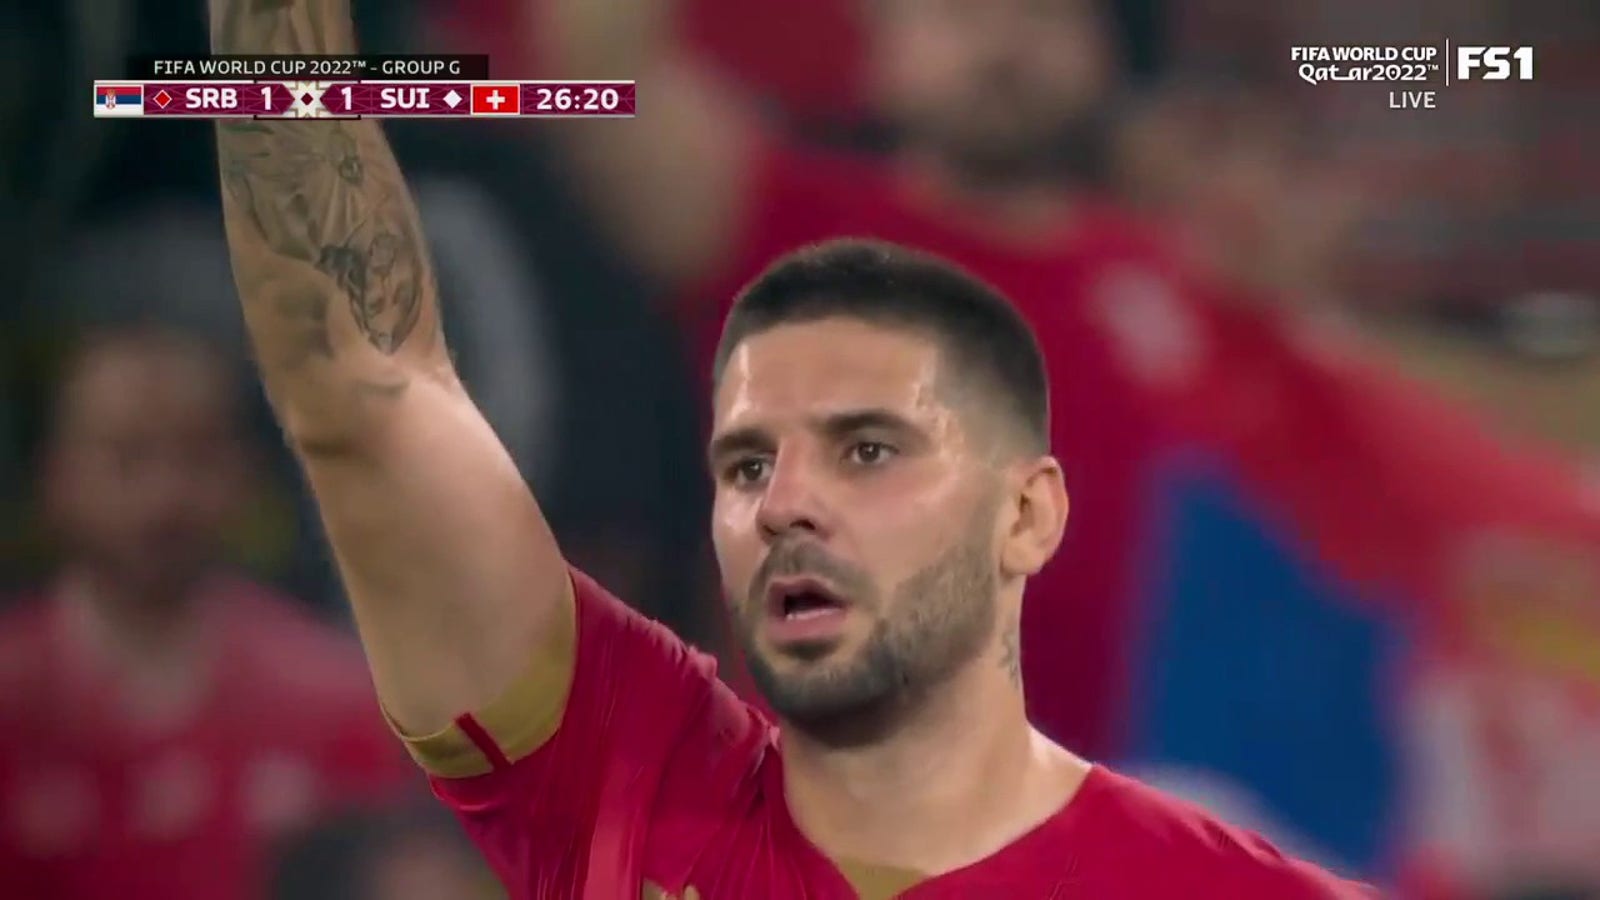 Le Serbe Aleksandar Mitrović marque un but contre la Suisse à la 26e minute